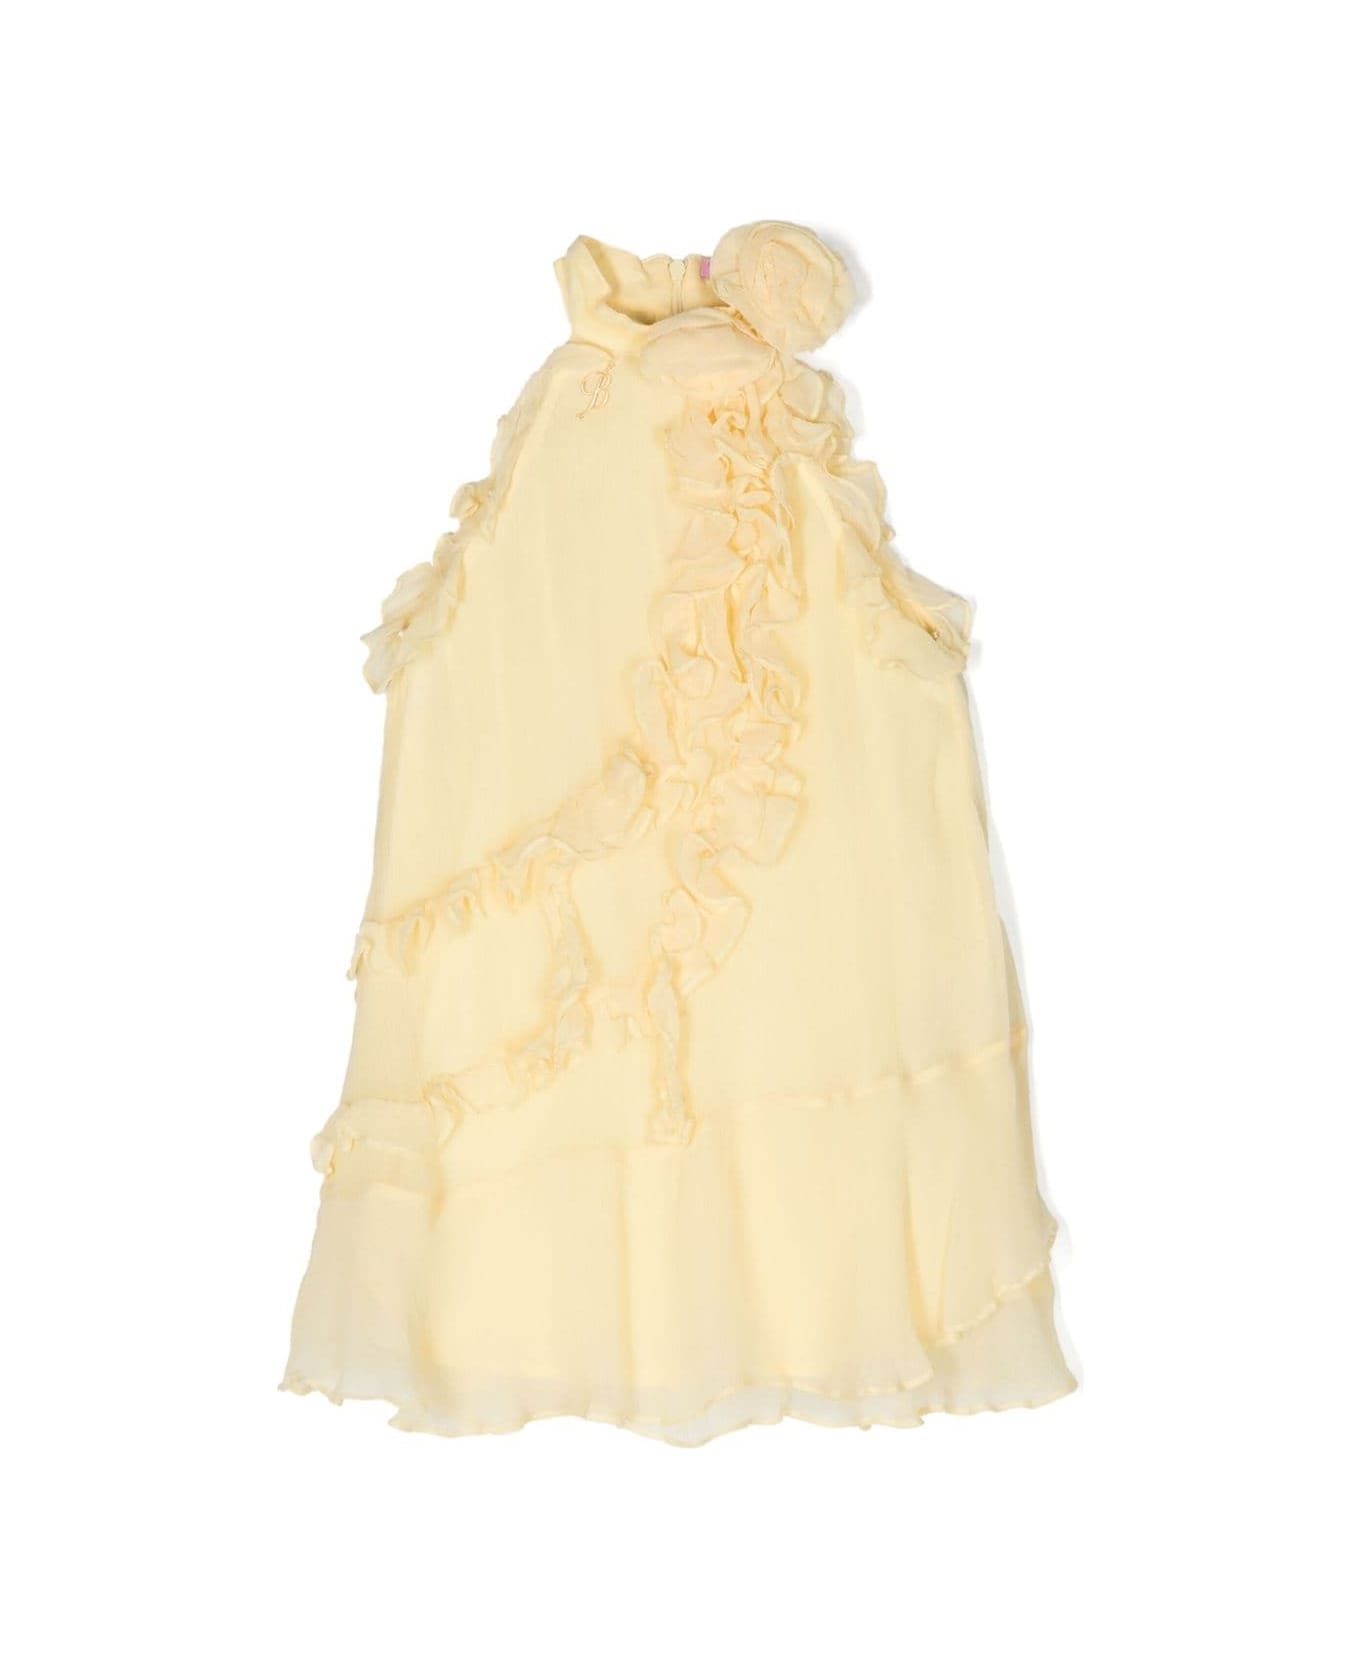 Miss Blumarine Pastel Yellow Ruffled Chiffon Dress - Giallo